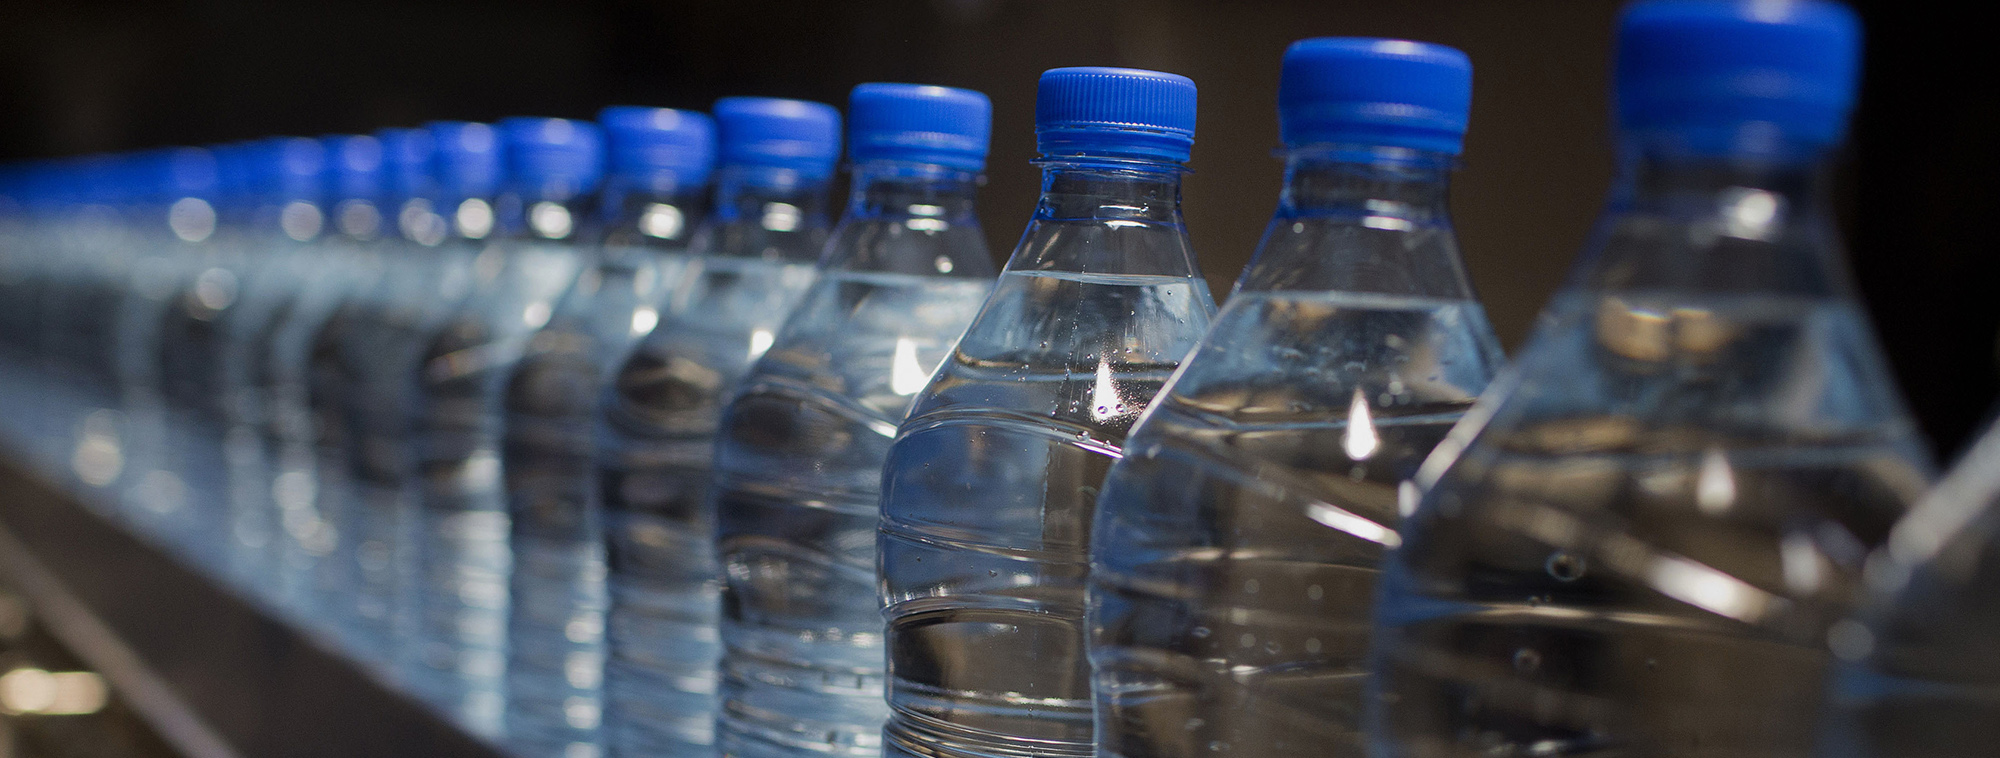 Is Alkaline Water Really Better? Essentia, Coke Join Drink Trend - Bloomberg